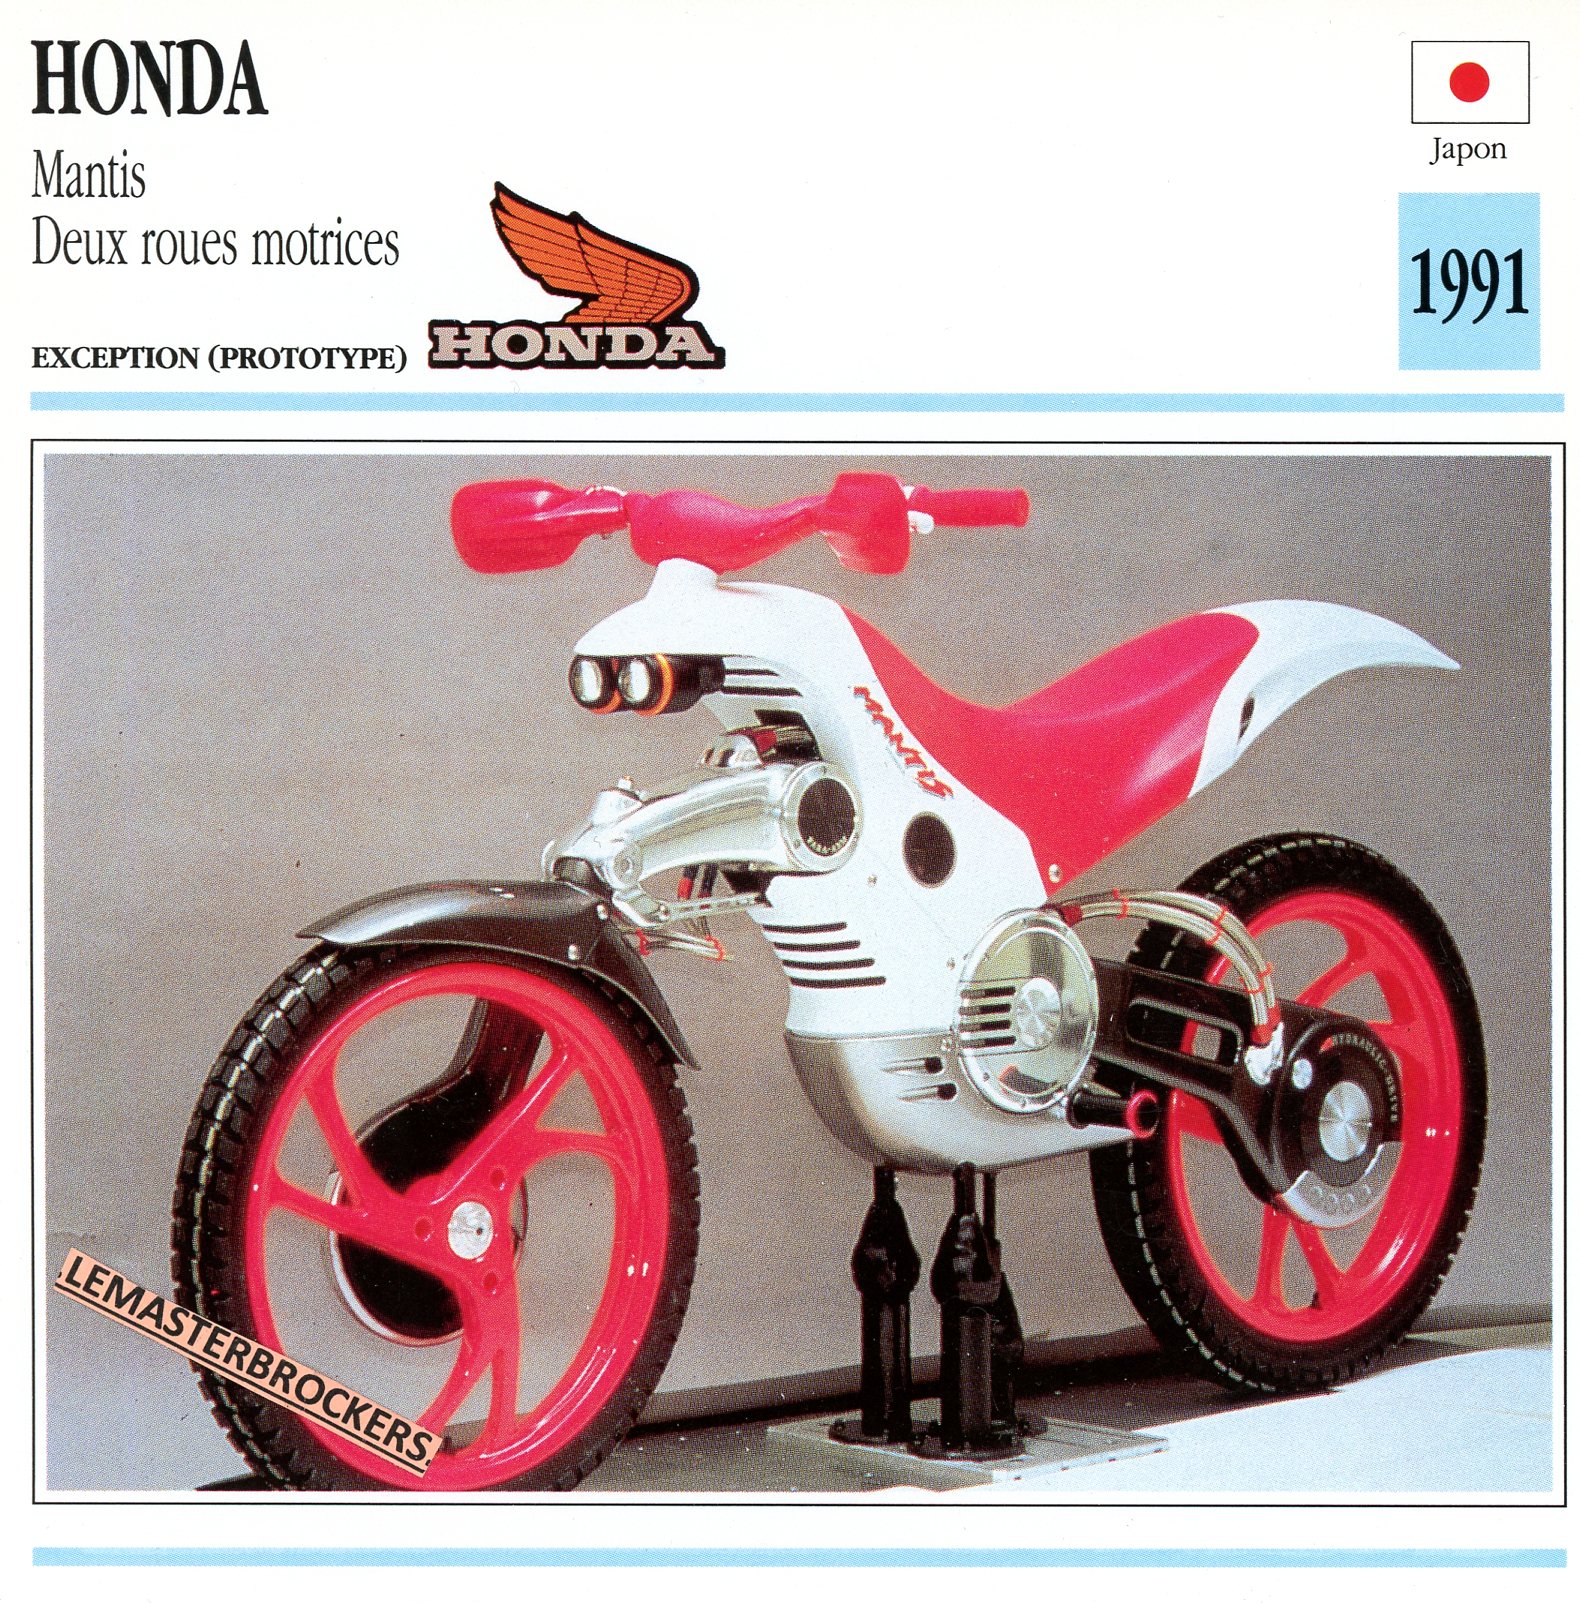 FICHE-MOTO-HONDA-MANTIS-LEMASTERBROCKERS-CARS-MOTORCYCLE-PROTOTYPE-1991